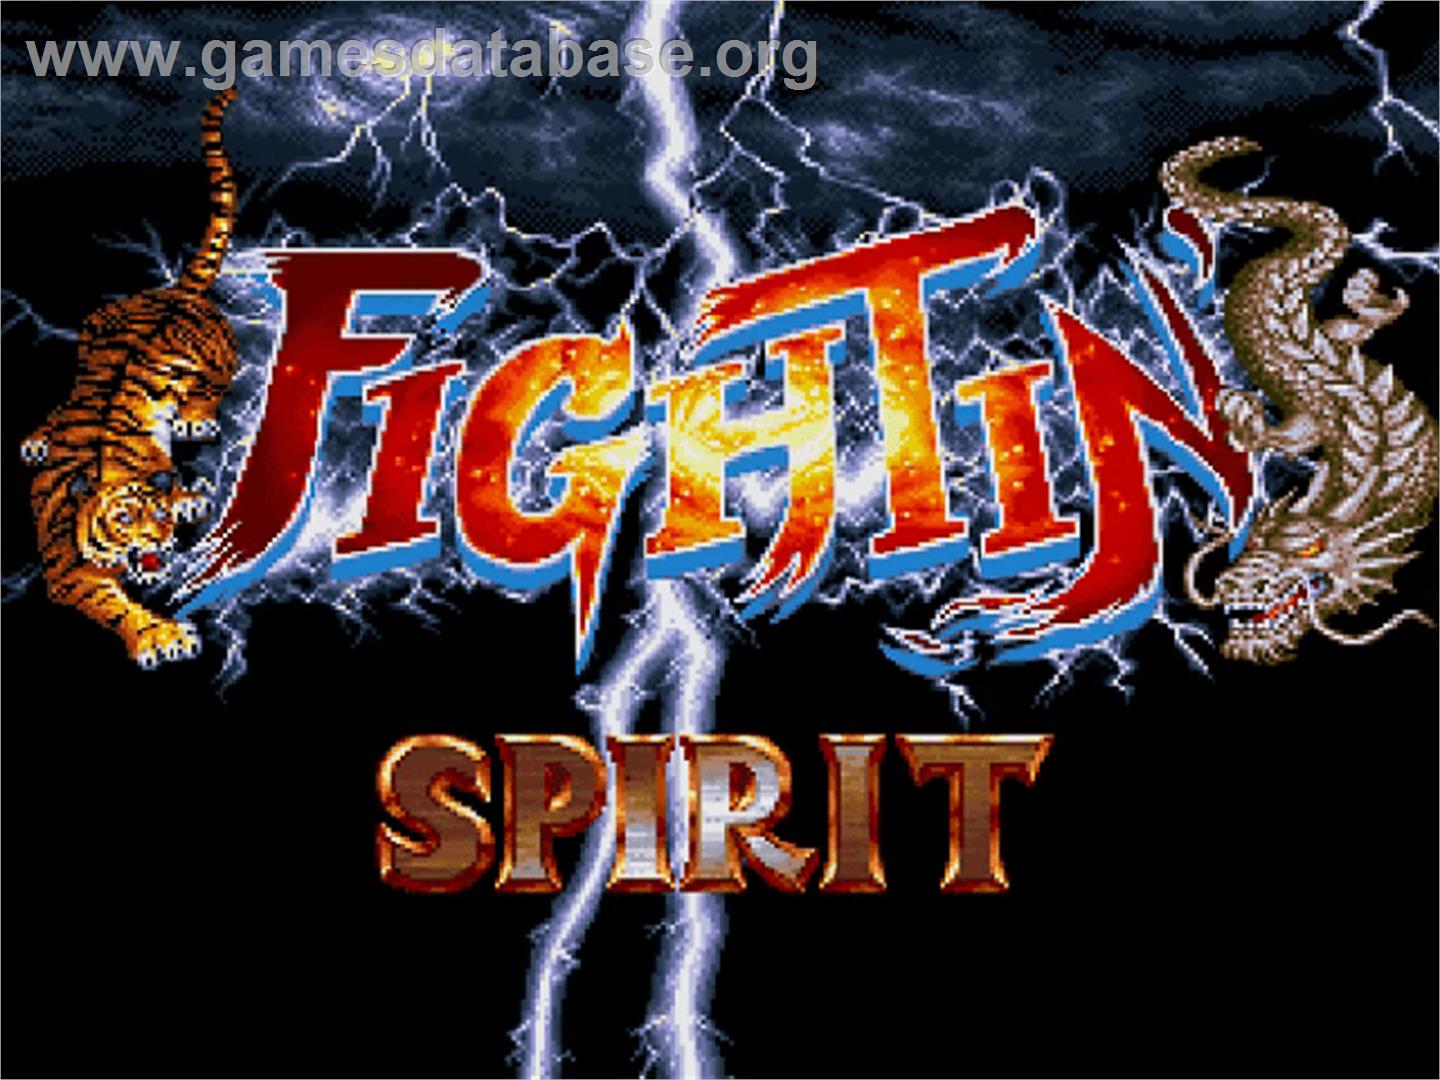 Fightin' Spirit - Commodore Amiga CD32 - Artwork - Title Screen